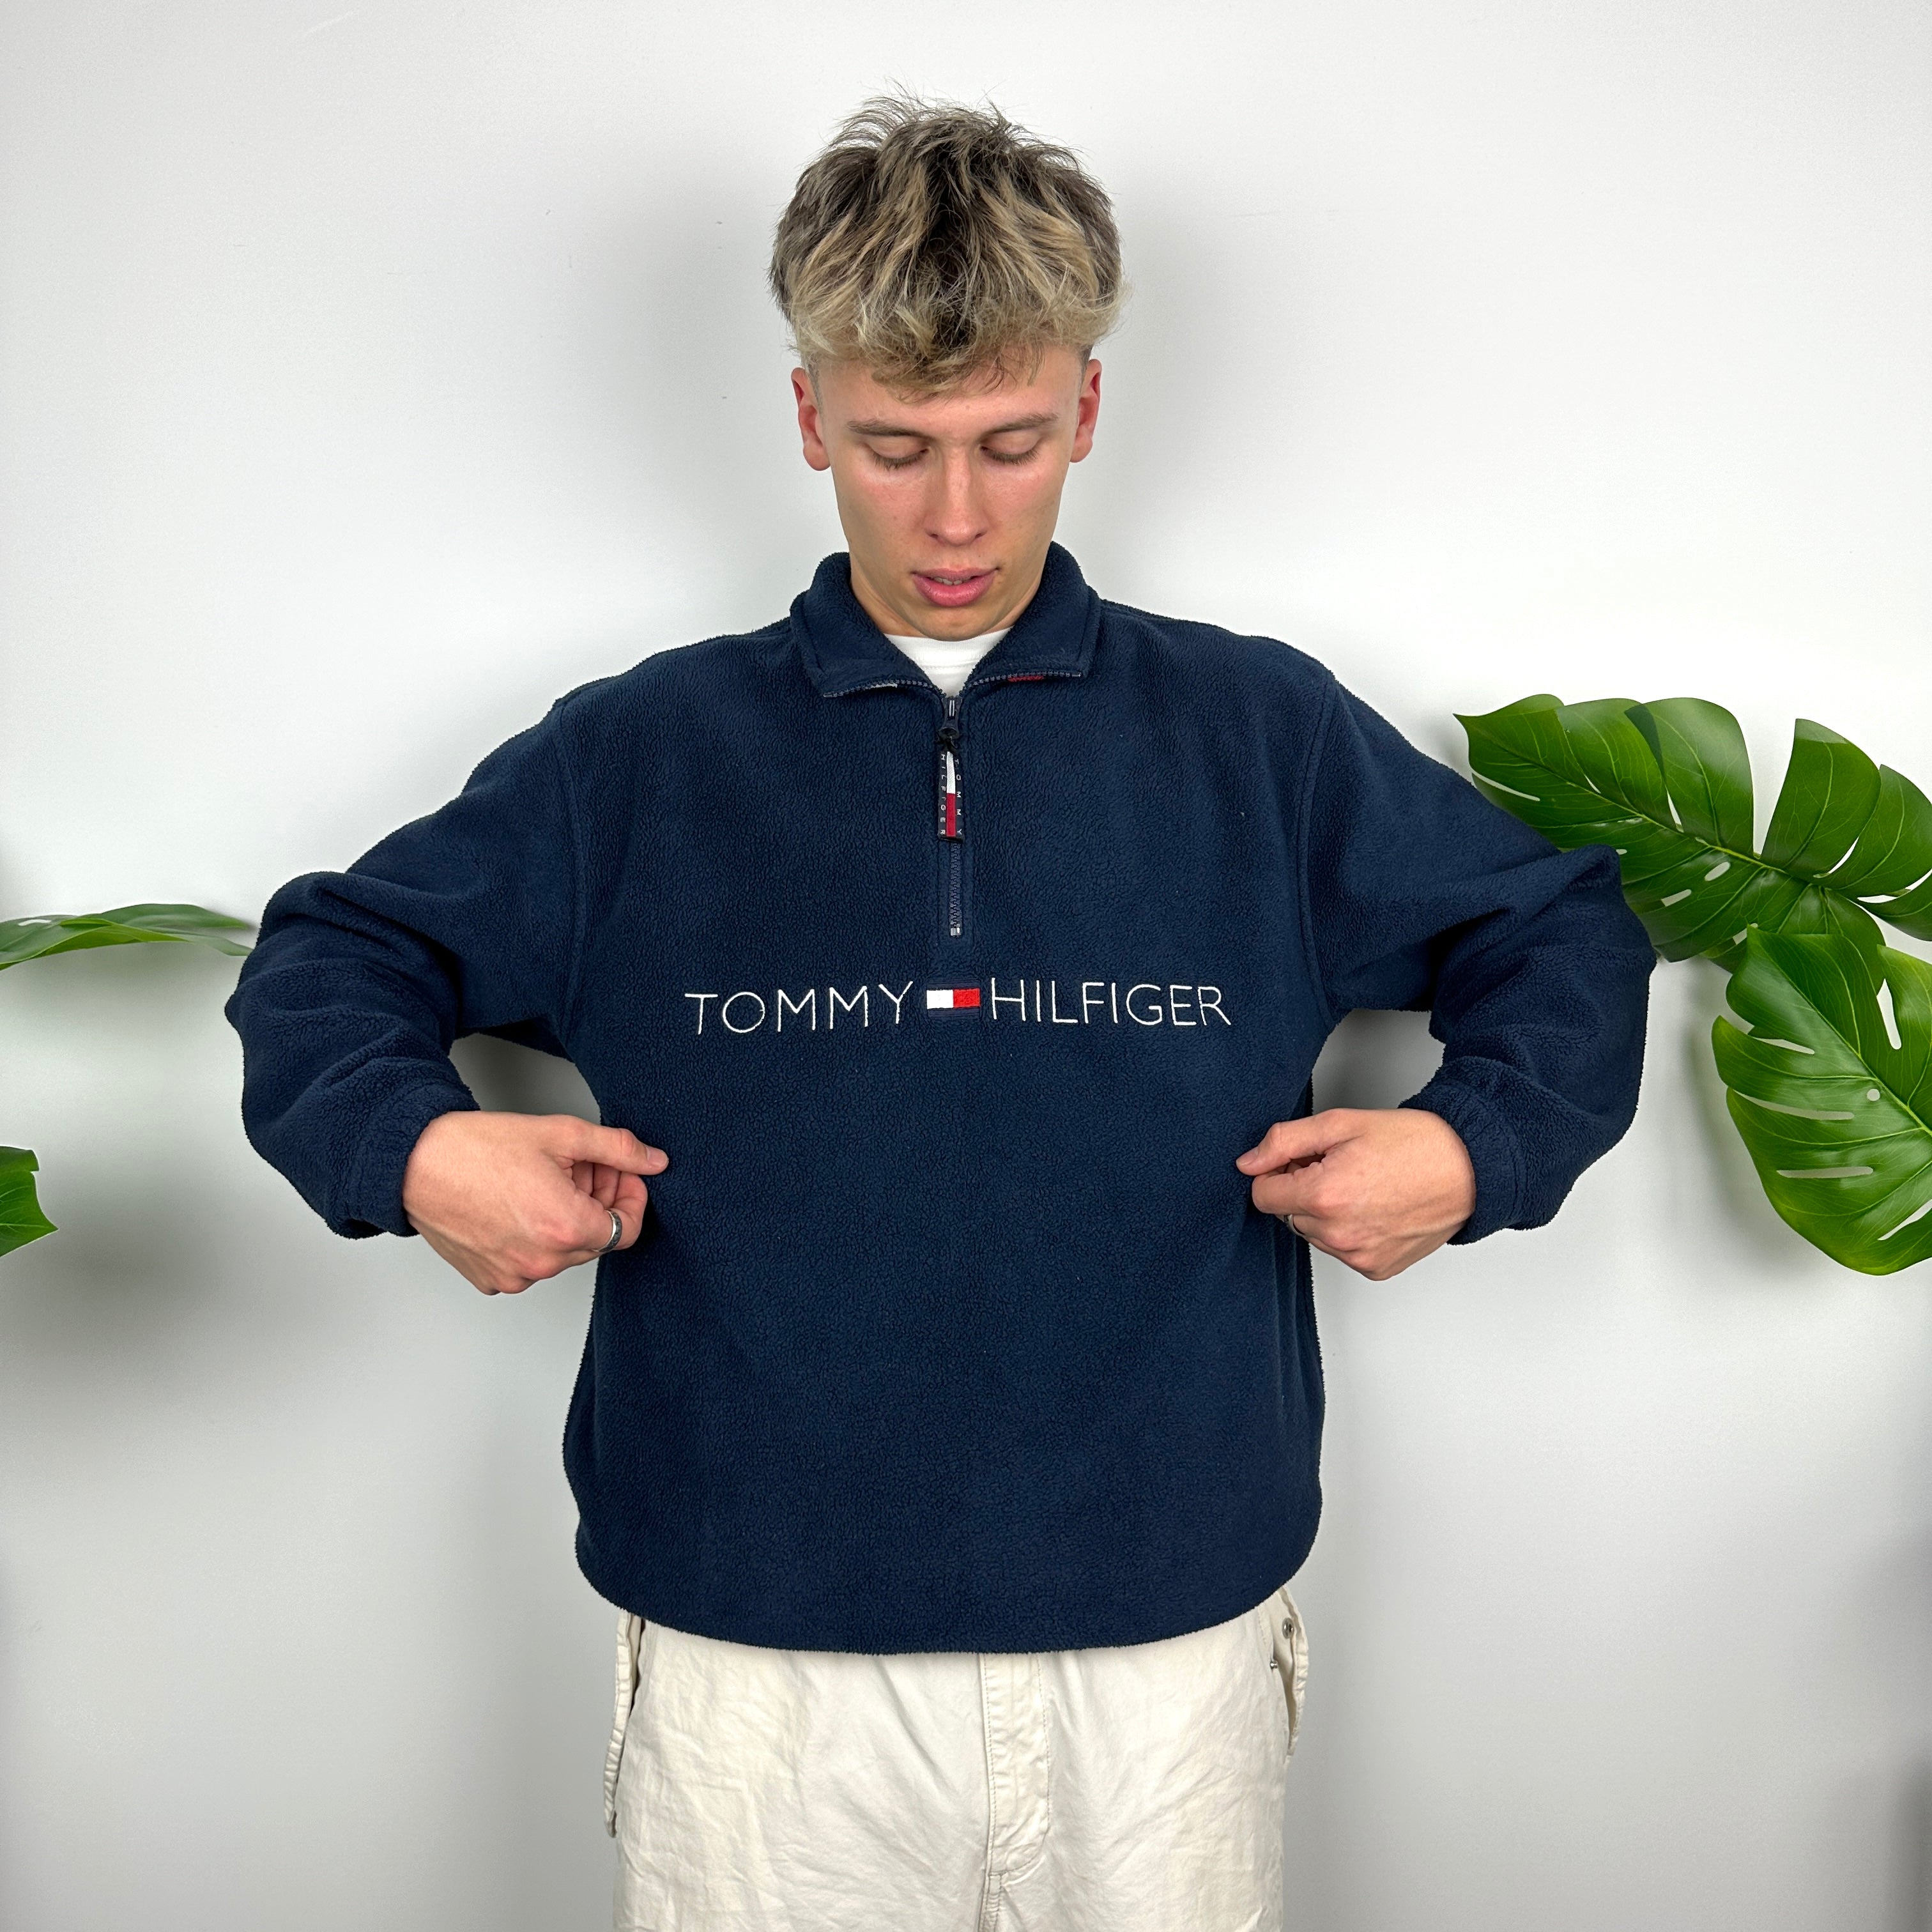 Tommy Hilfiger Navy Embroidered Spell Out Teddy Bear Fleece Quarter Zip Sweatshirt (M)